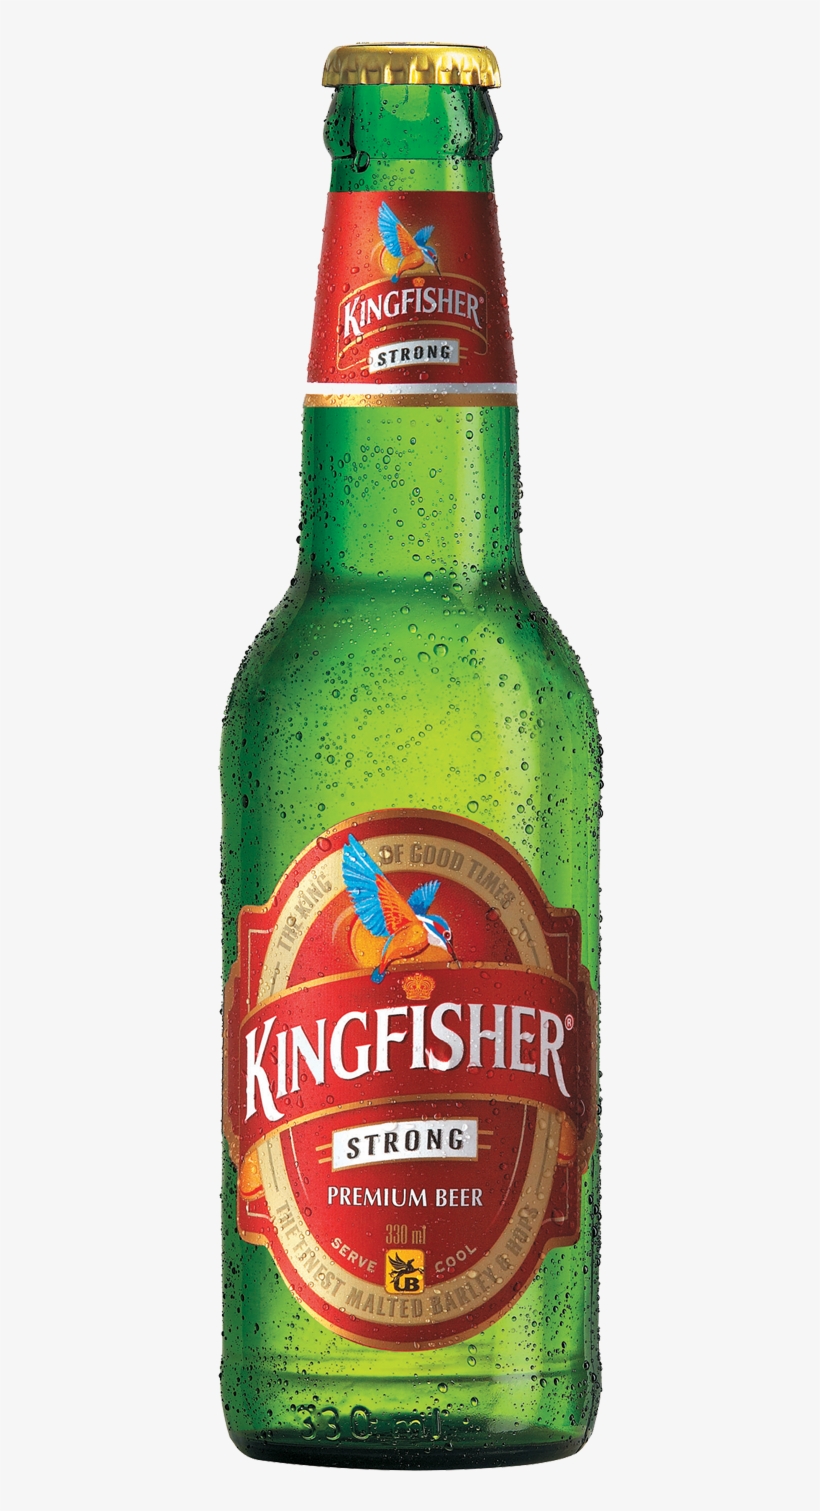 Kingfisher Strong Premium Beer 330ml - Kingfisher Premium Lager (nz), transparent png #2575263